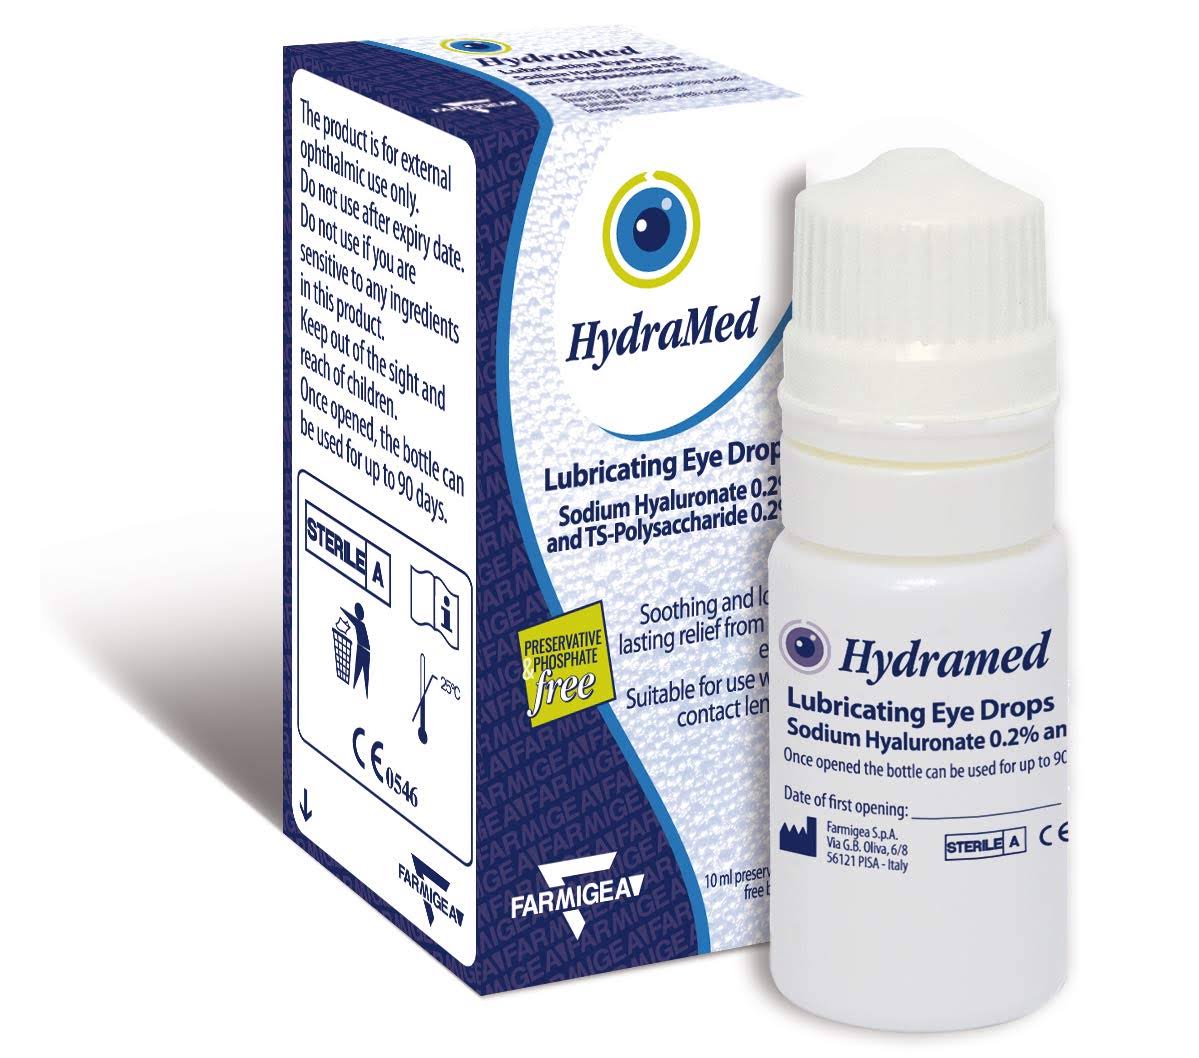 HydraMed 0.2% Preservative-Free Eye Drops